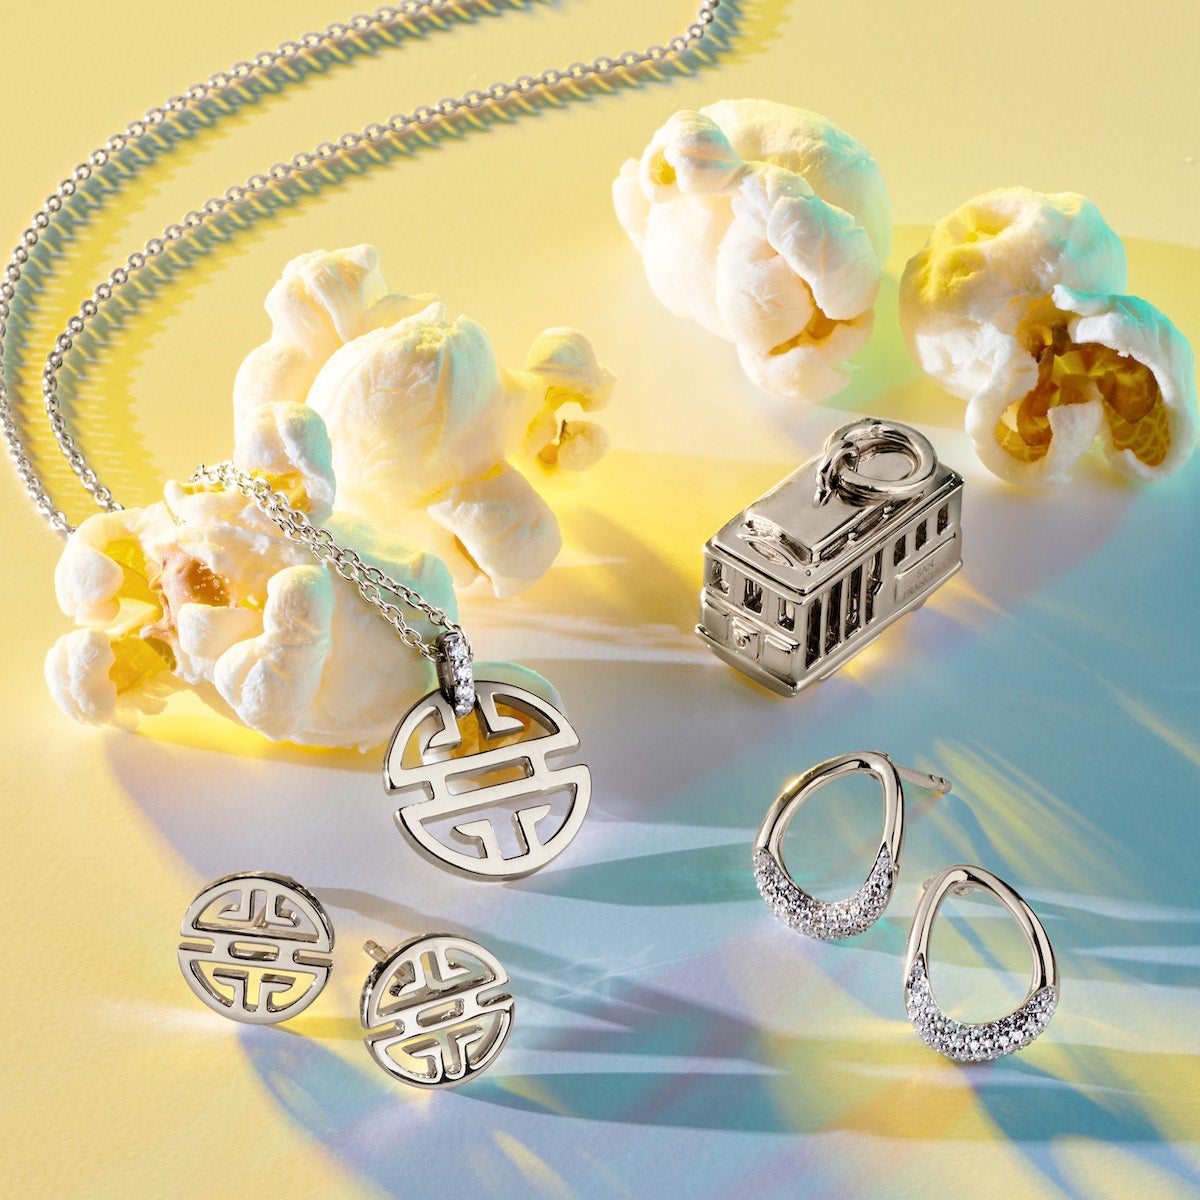 Silver Shou Pendant Necklace with Diamond Bale